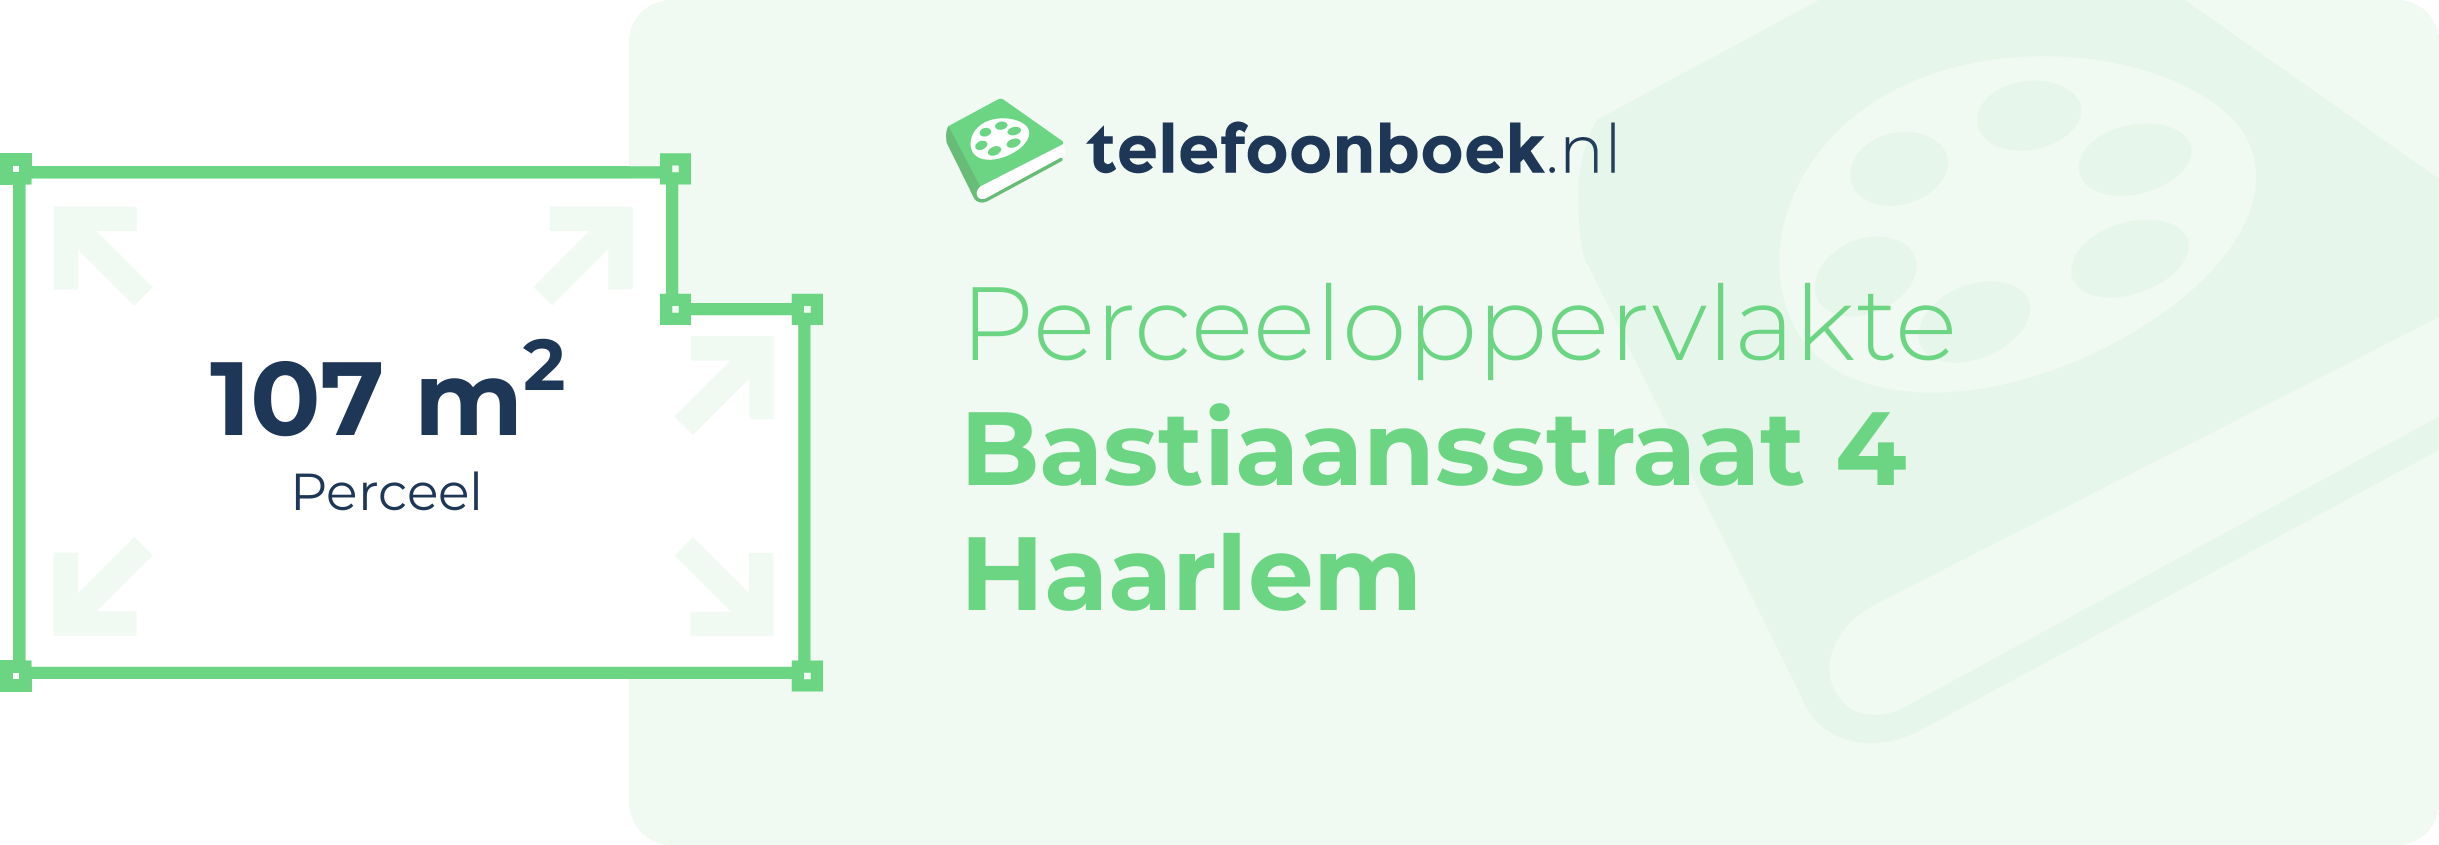 Perceeloppervlakte Bastiaansstraat 4 Haarlem